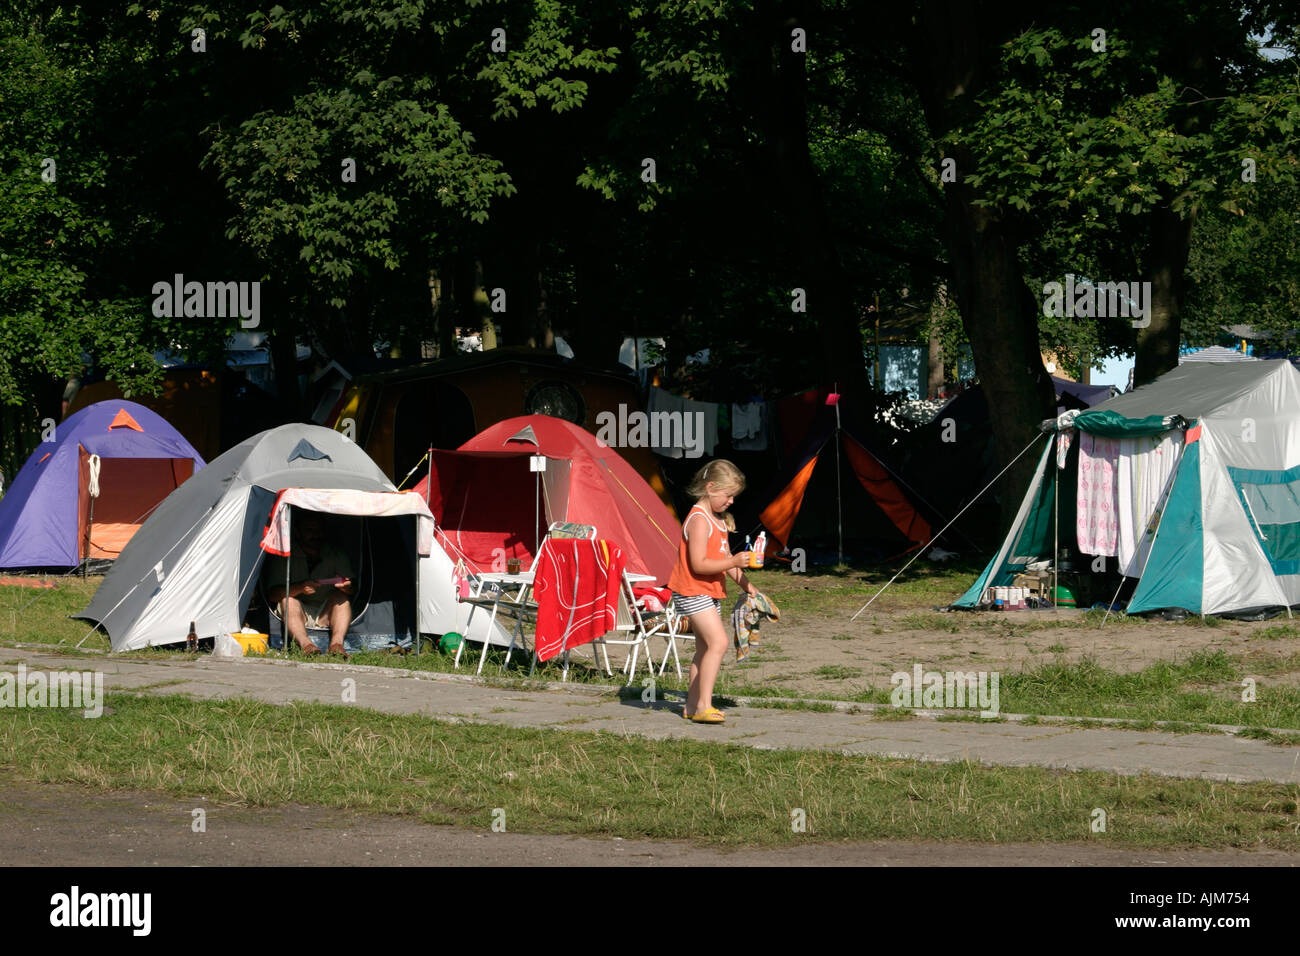 Zelten camping Polen Stockfotografie - Alamy